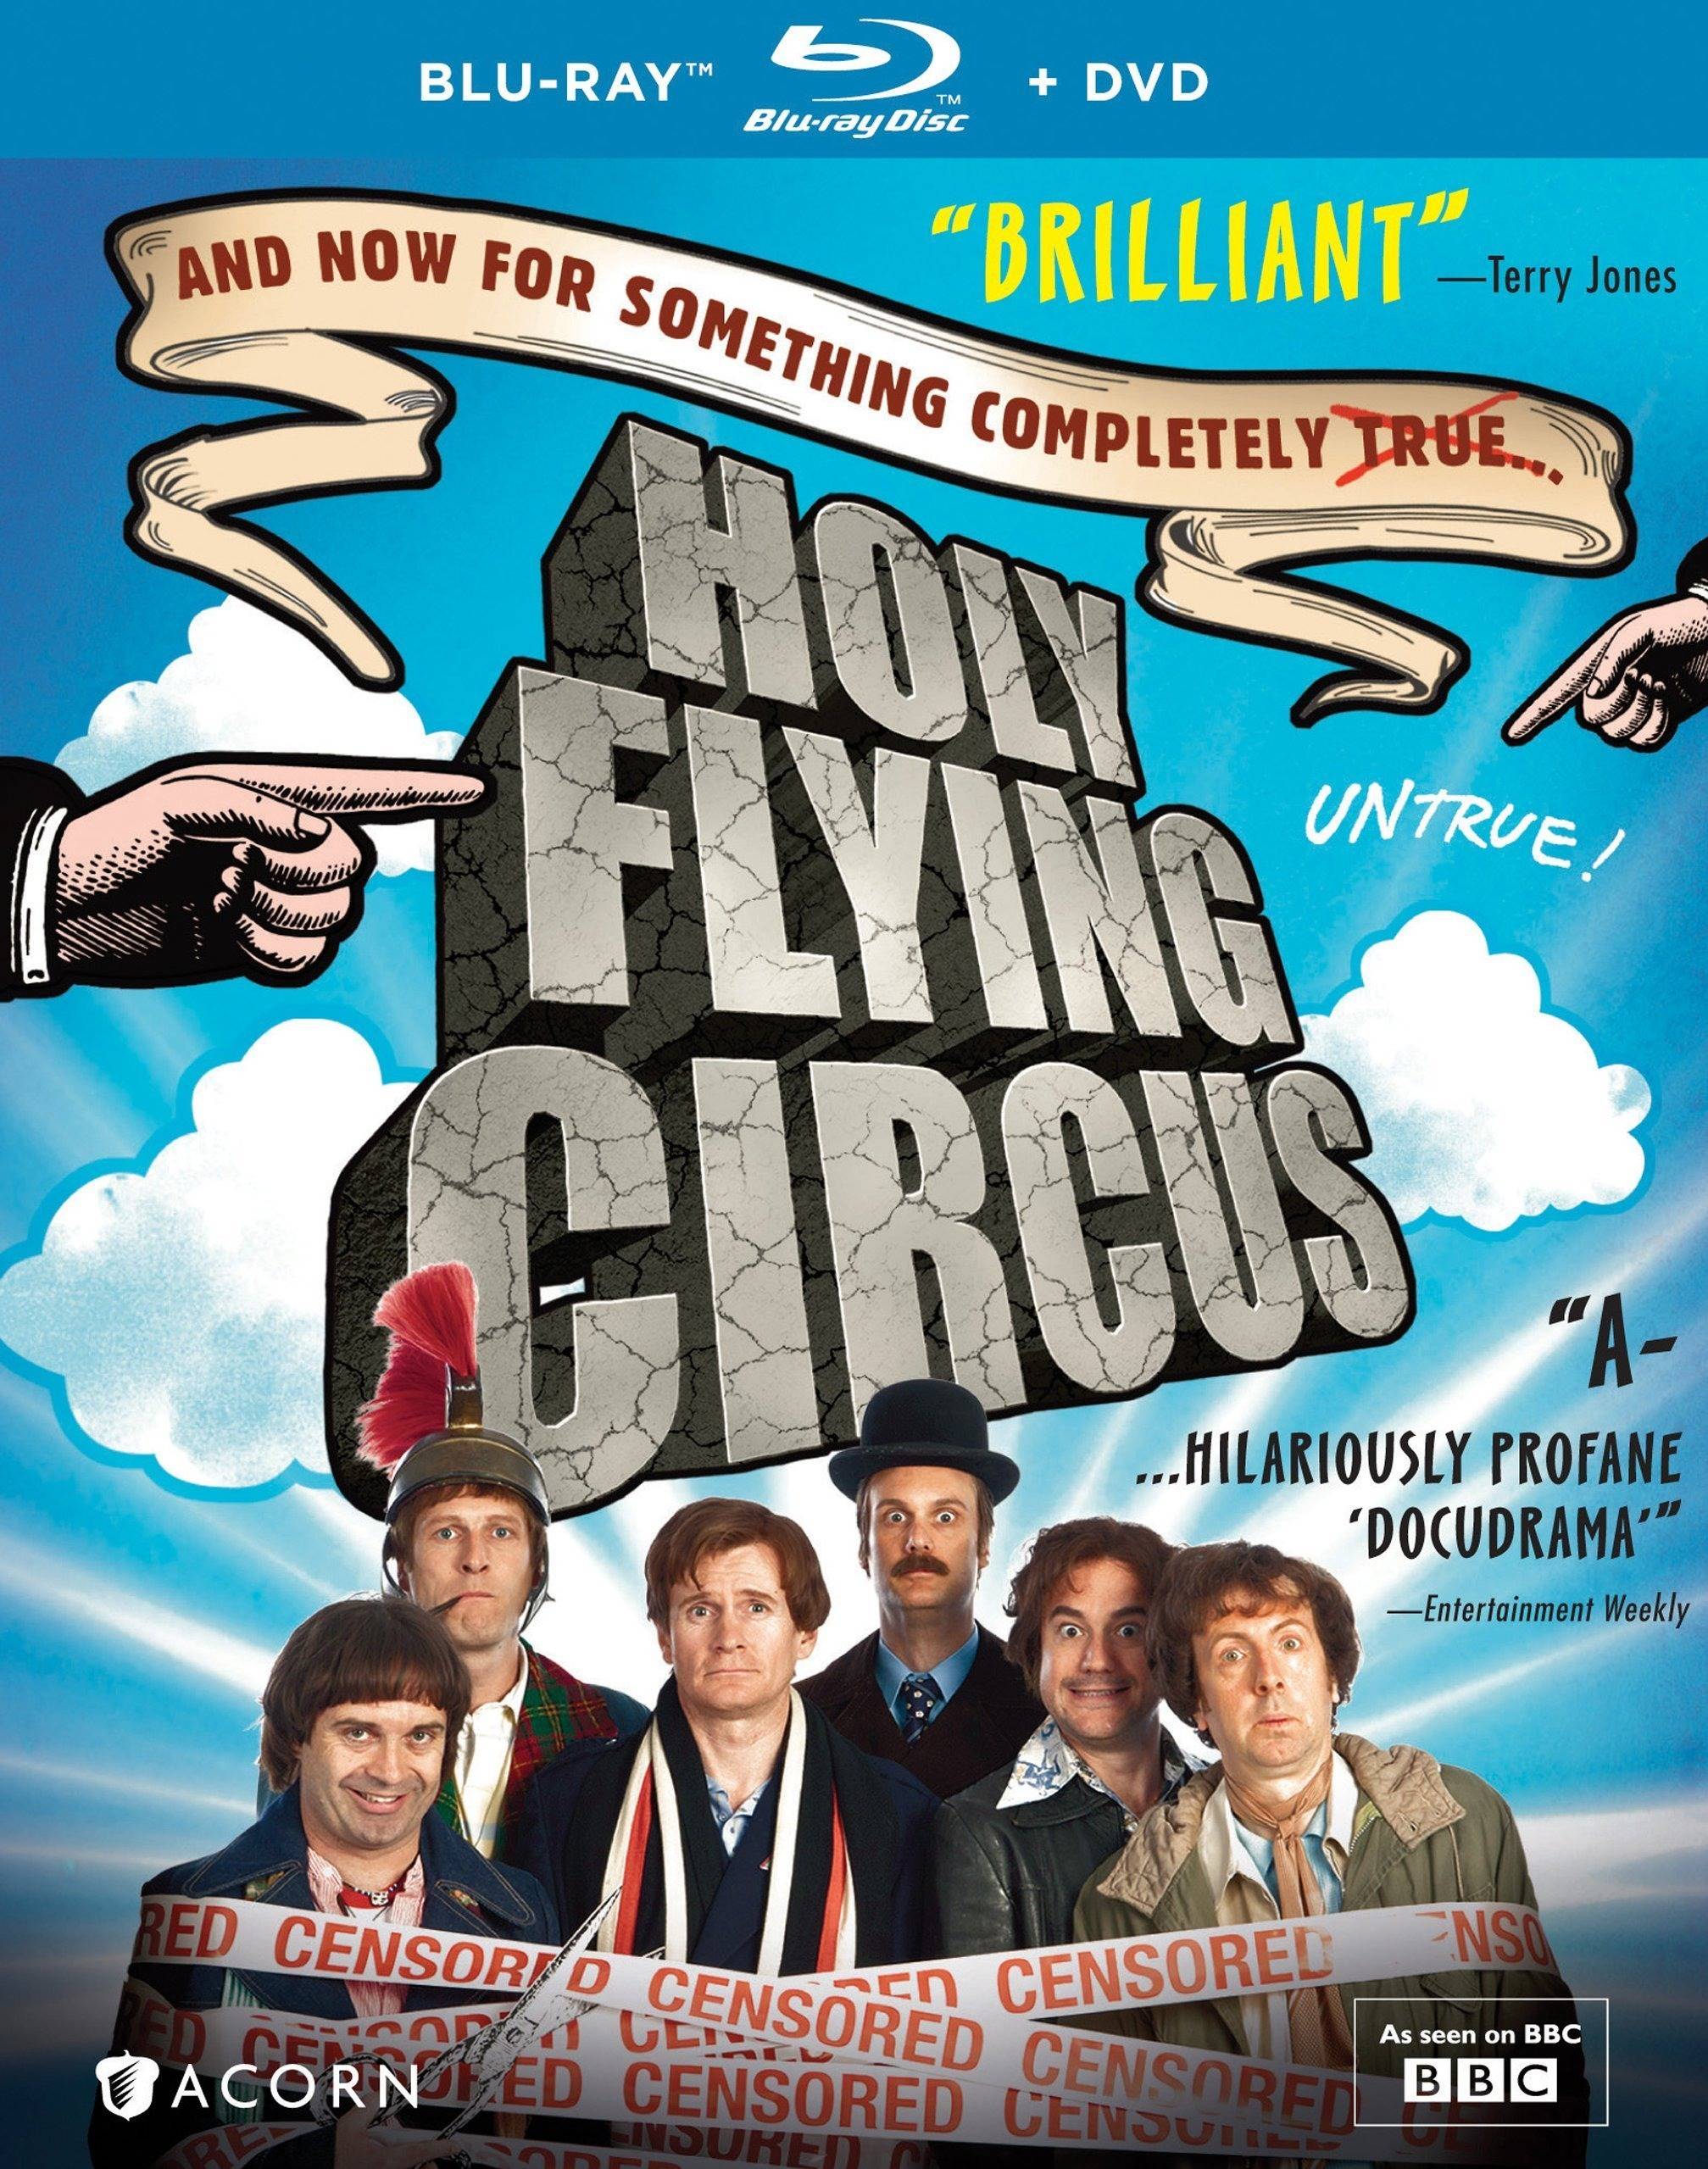 Monty Python's Flying Circus #9